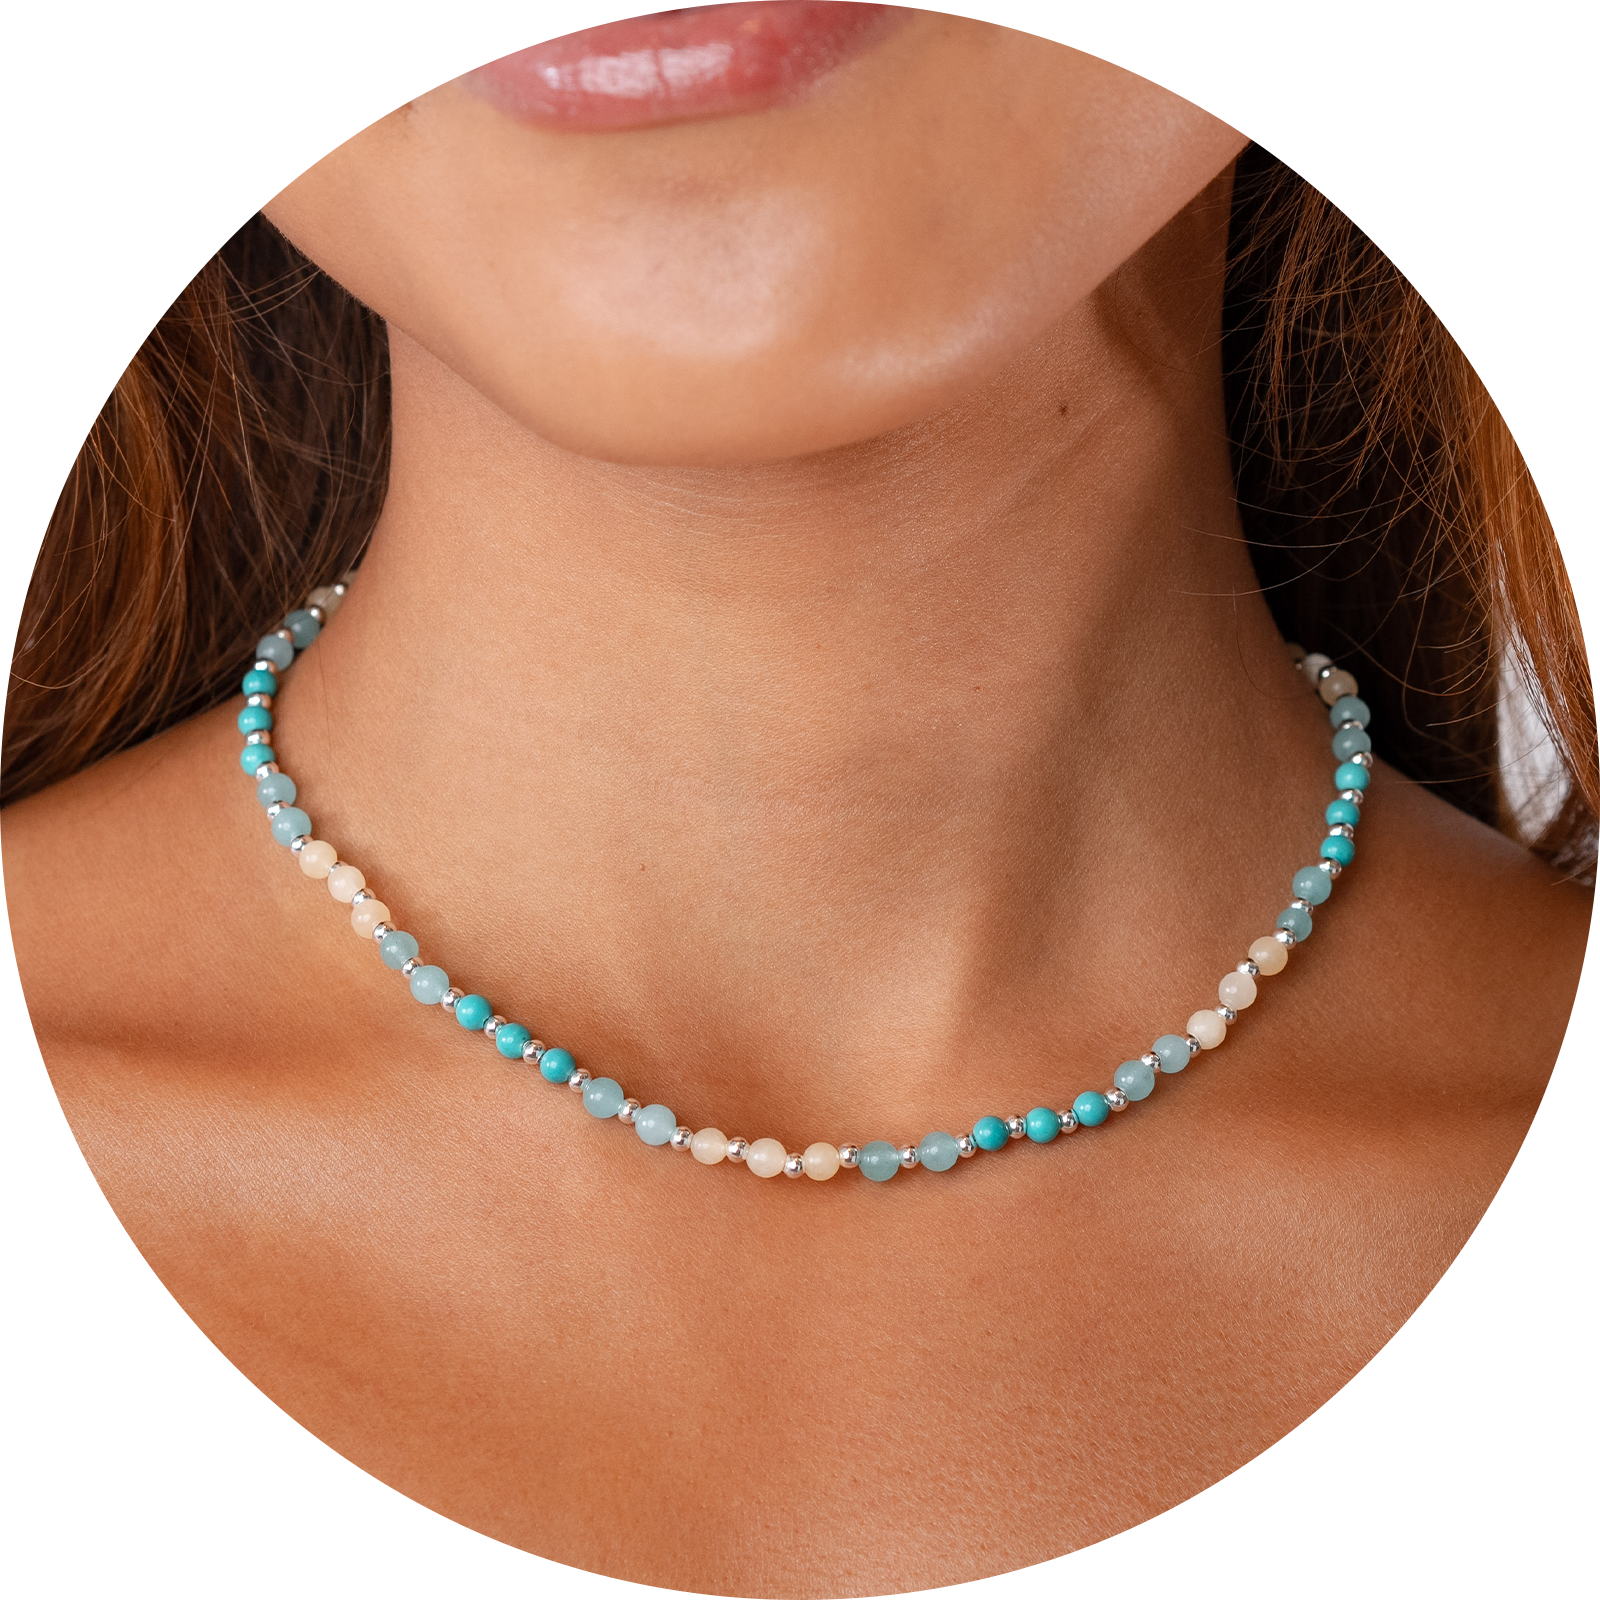 Turquoise and Amazonite stone healing necklace